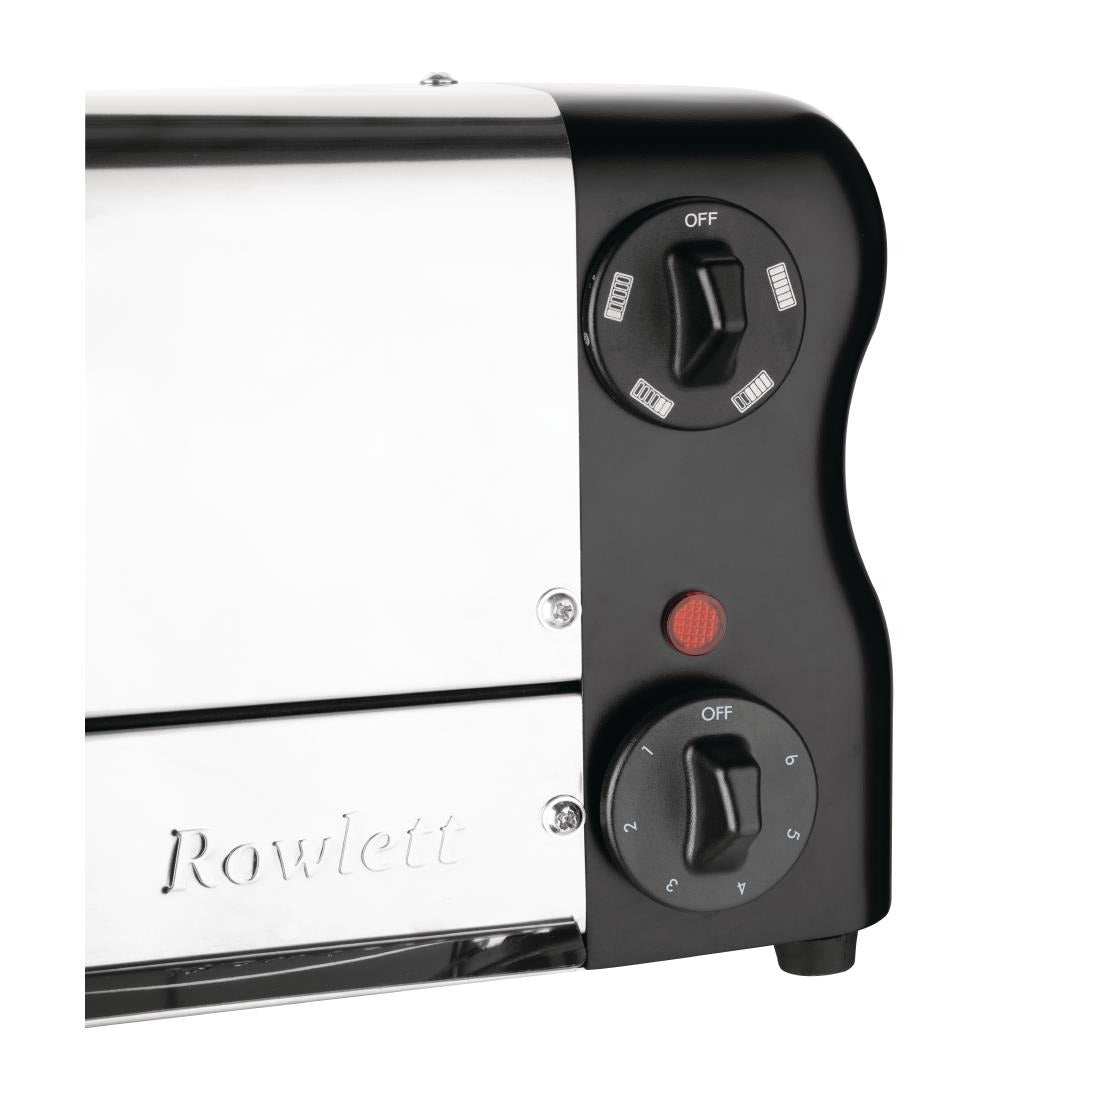 Rowlett Espirit 6 Slot Toaster Jet Black - DR073 CH187